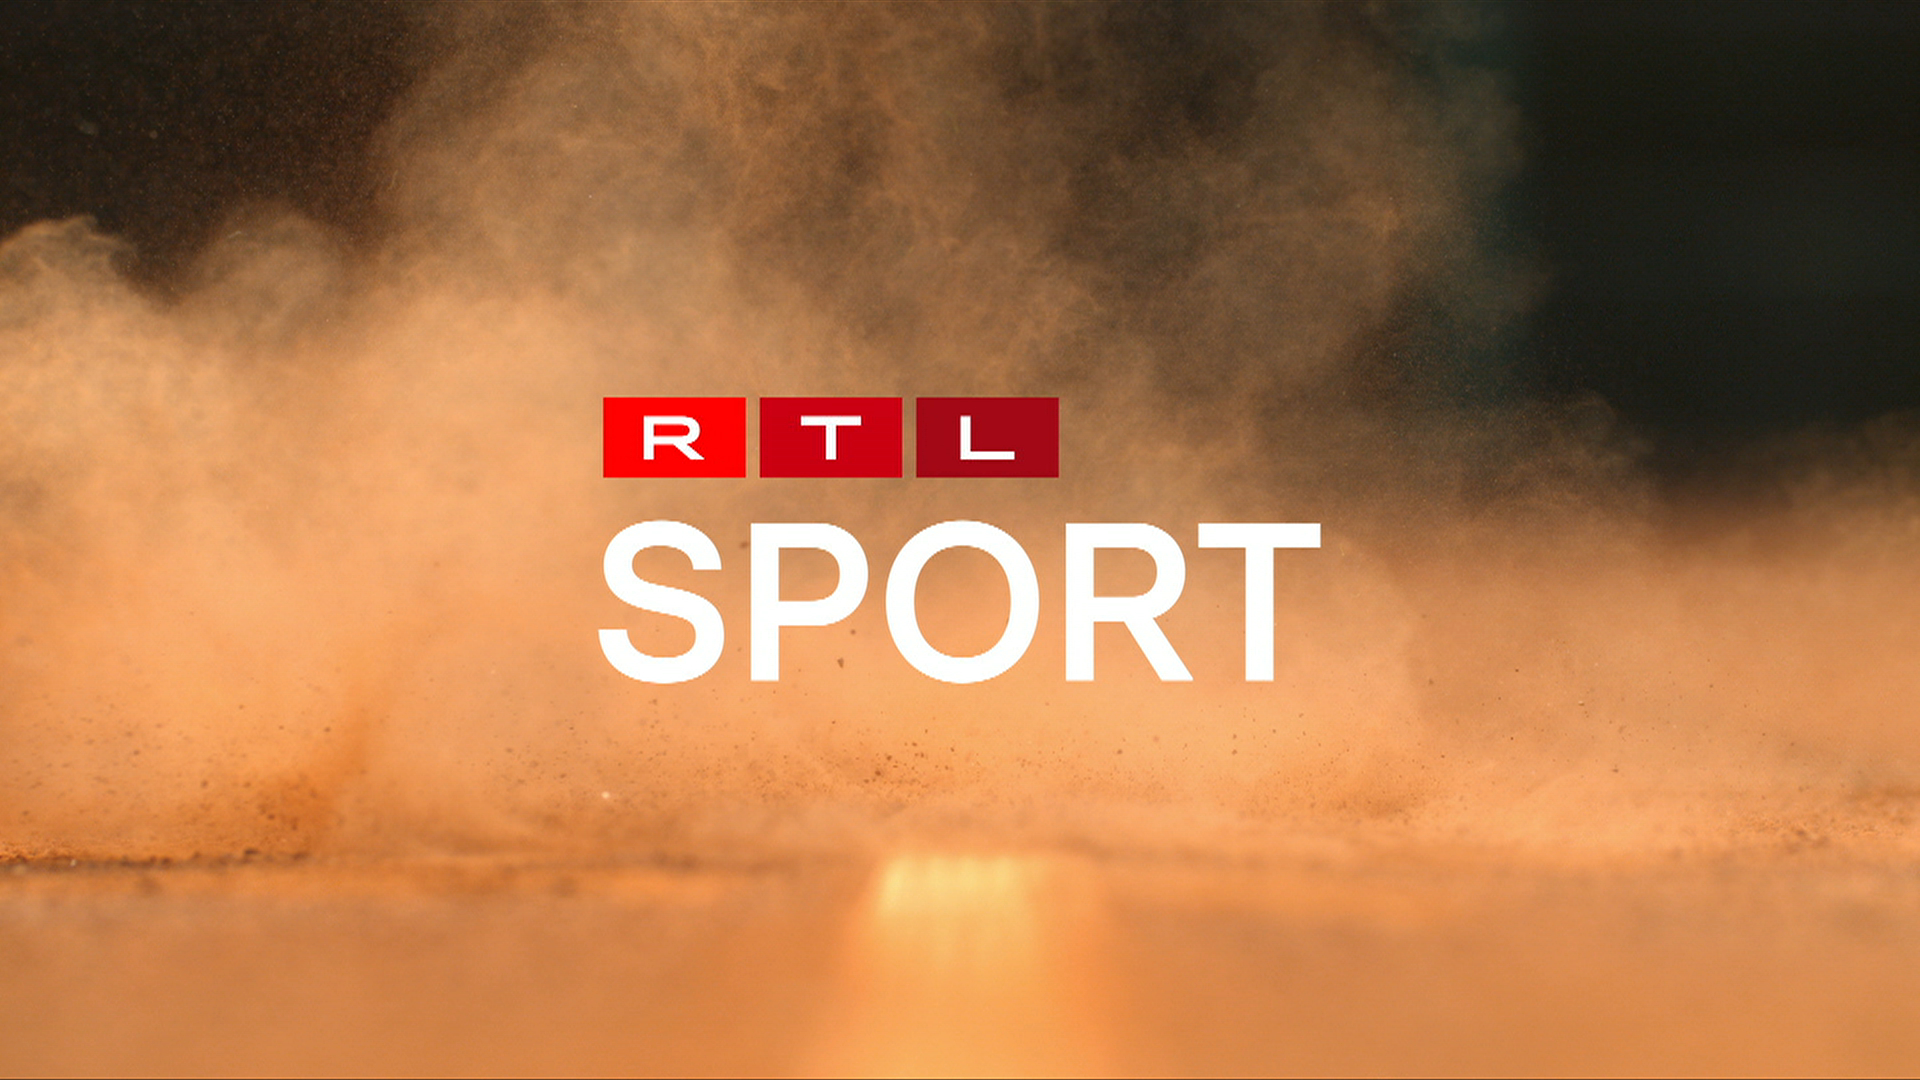 RTL Play